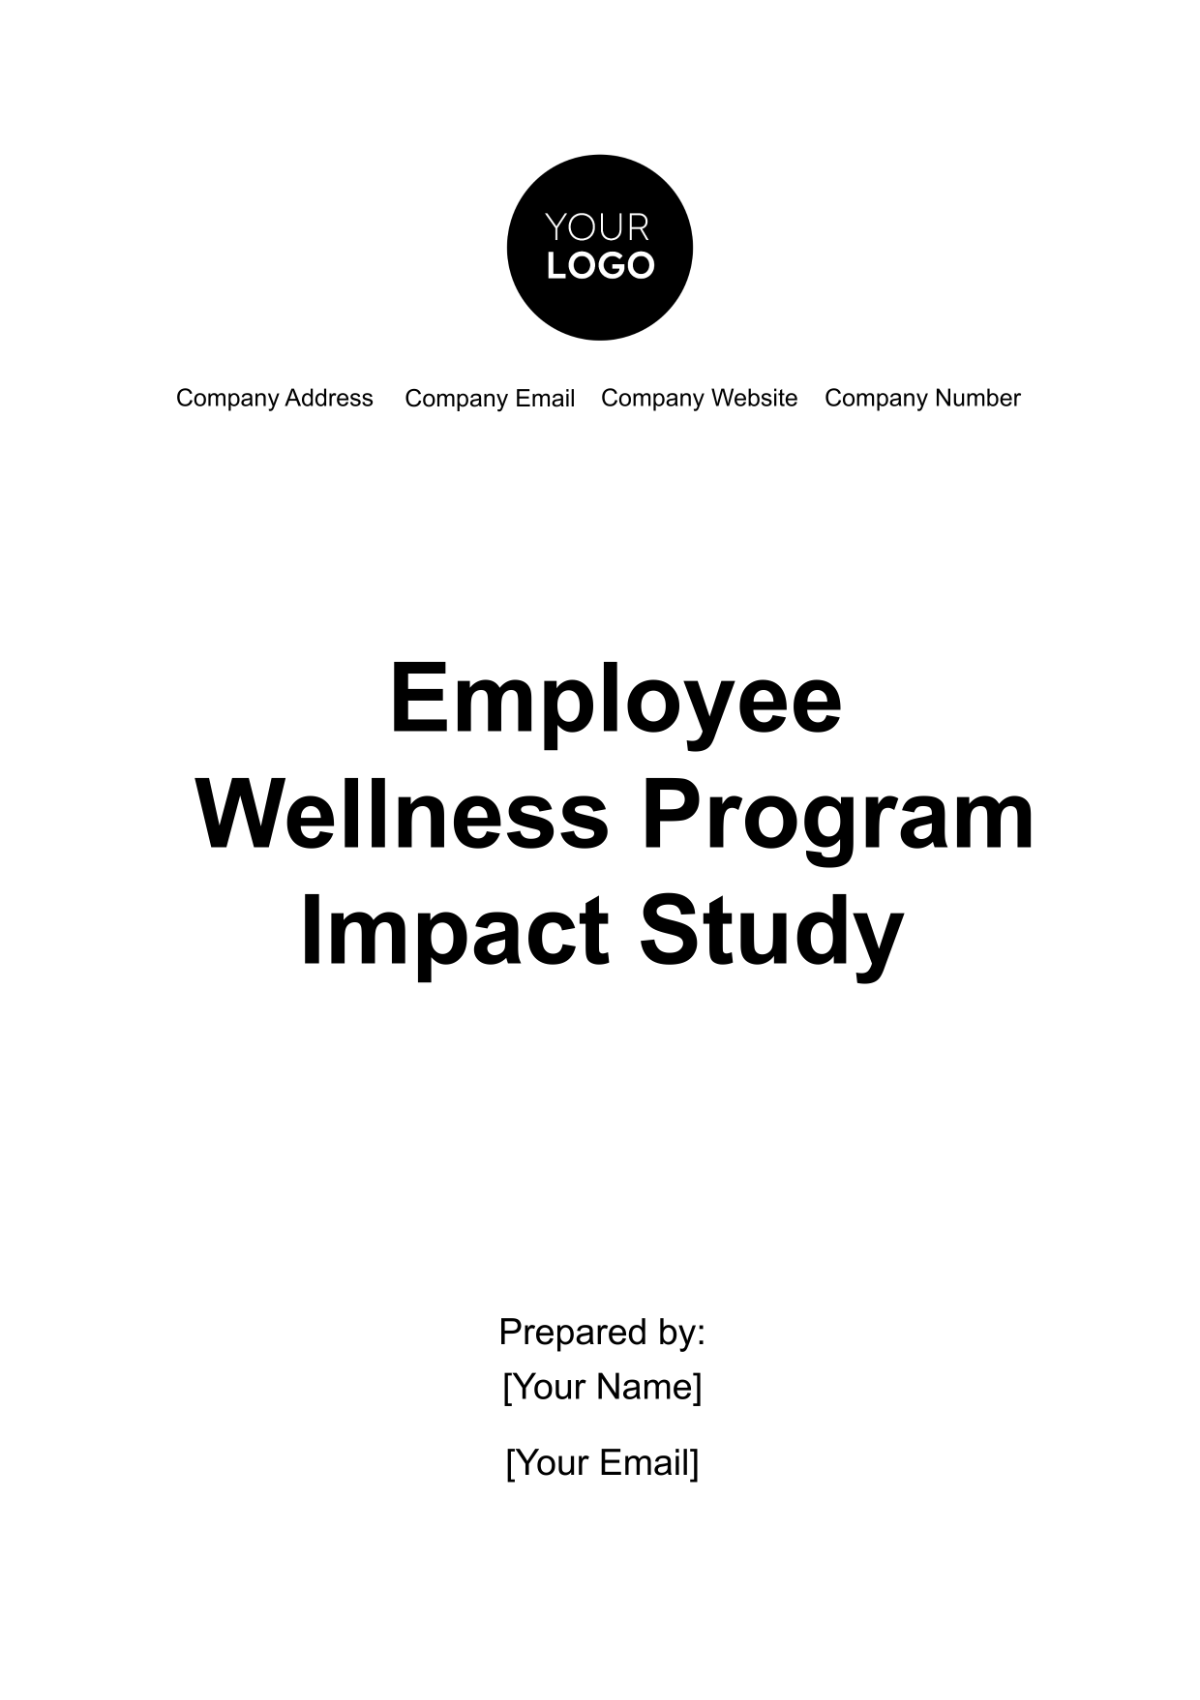 Employee Wellness Program Impact Study Template